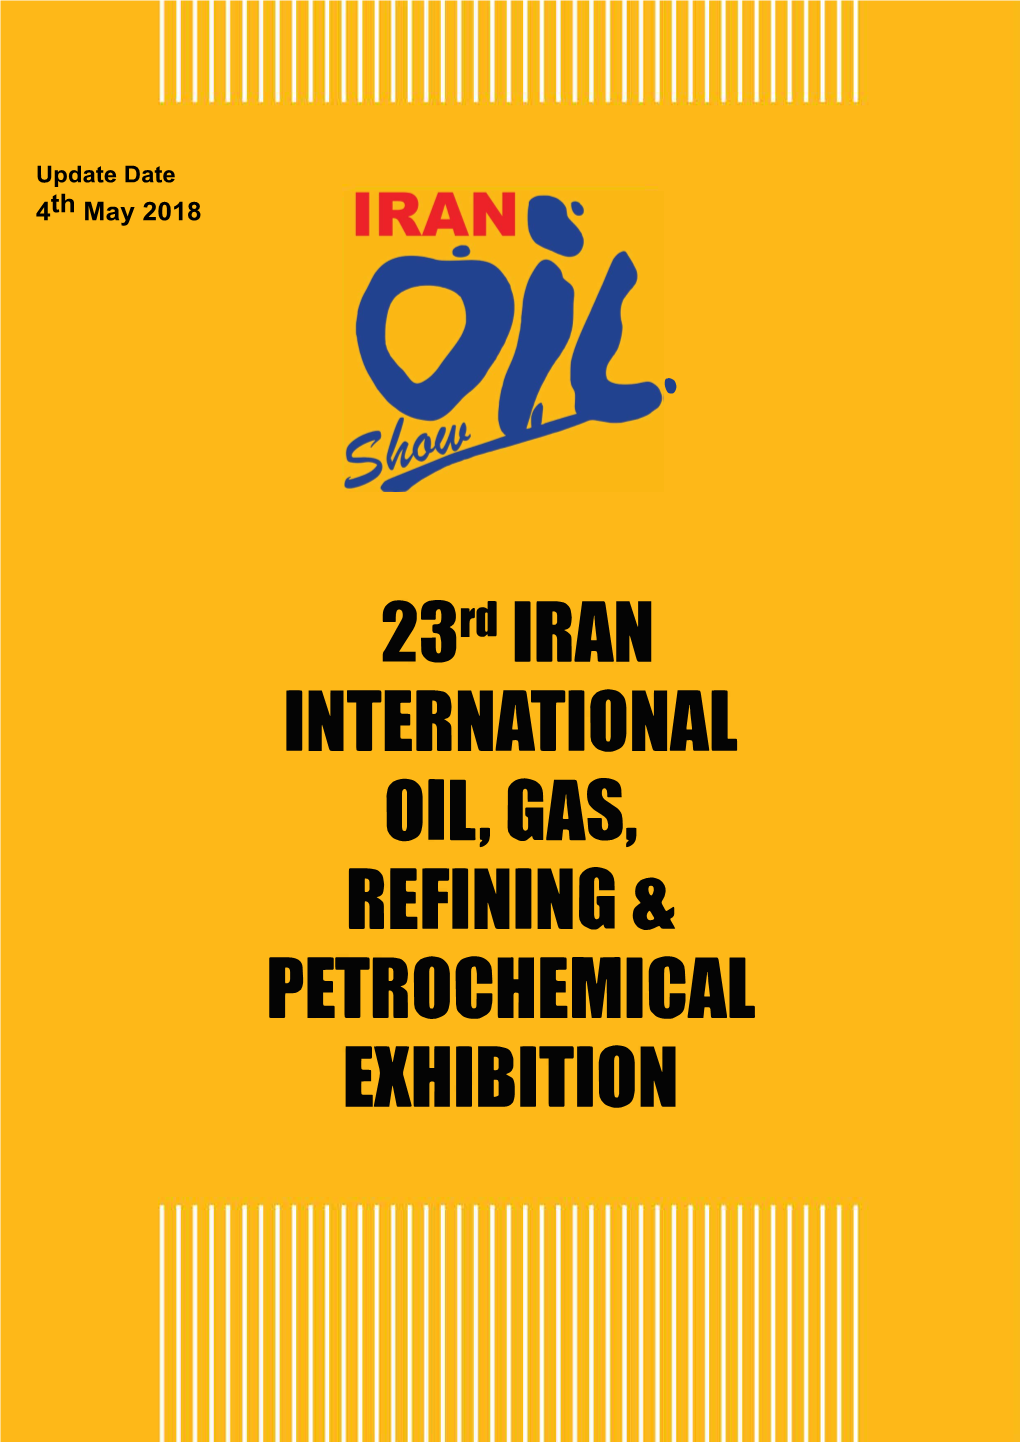 23Rd IRAN International Oil, GAS, REFINING & Petrochemical